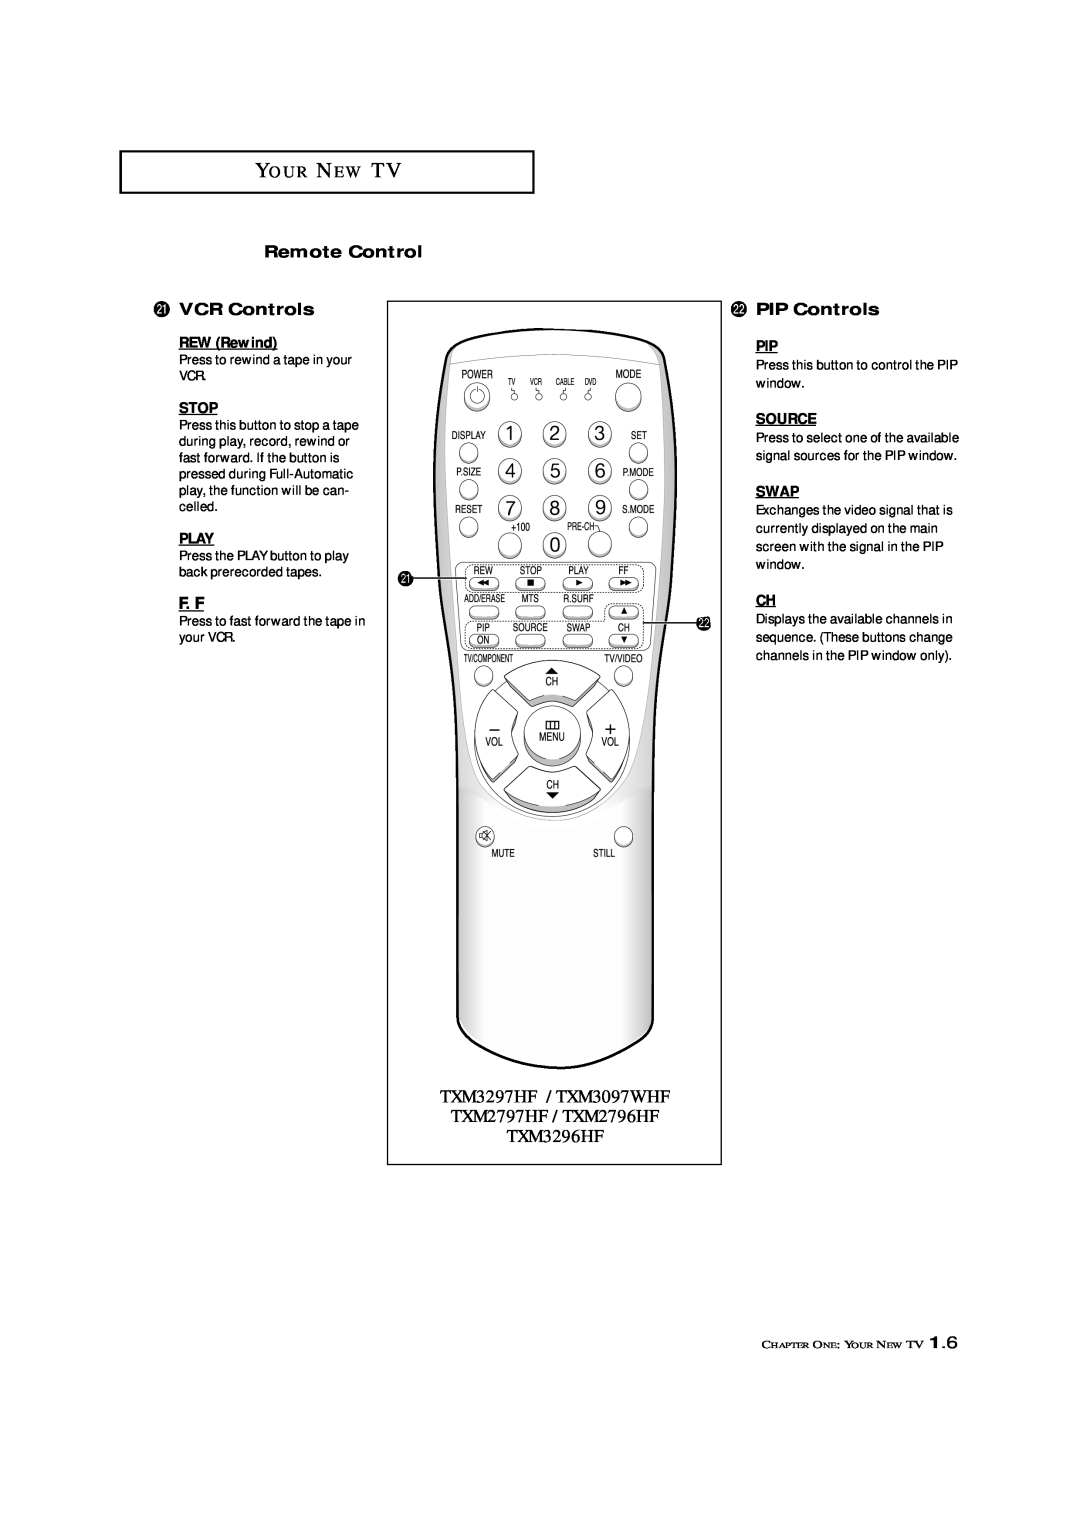 Samsung TXM 3298HF Y O U R N E W T, Remote Control, ¸ VCR Controls, F. F, PIP Controls, REW Rewind, Stop, Play, Source 